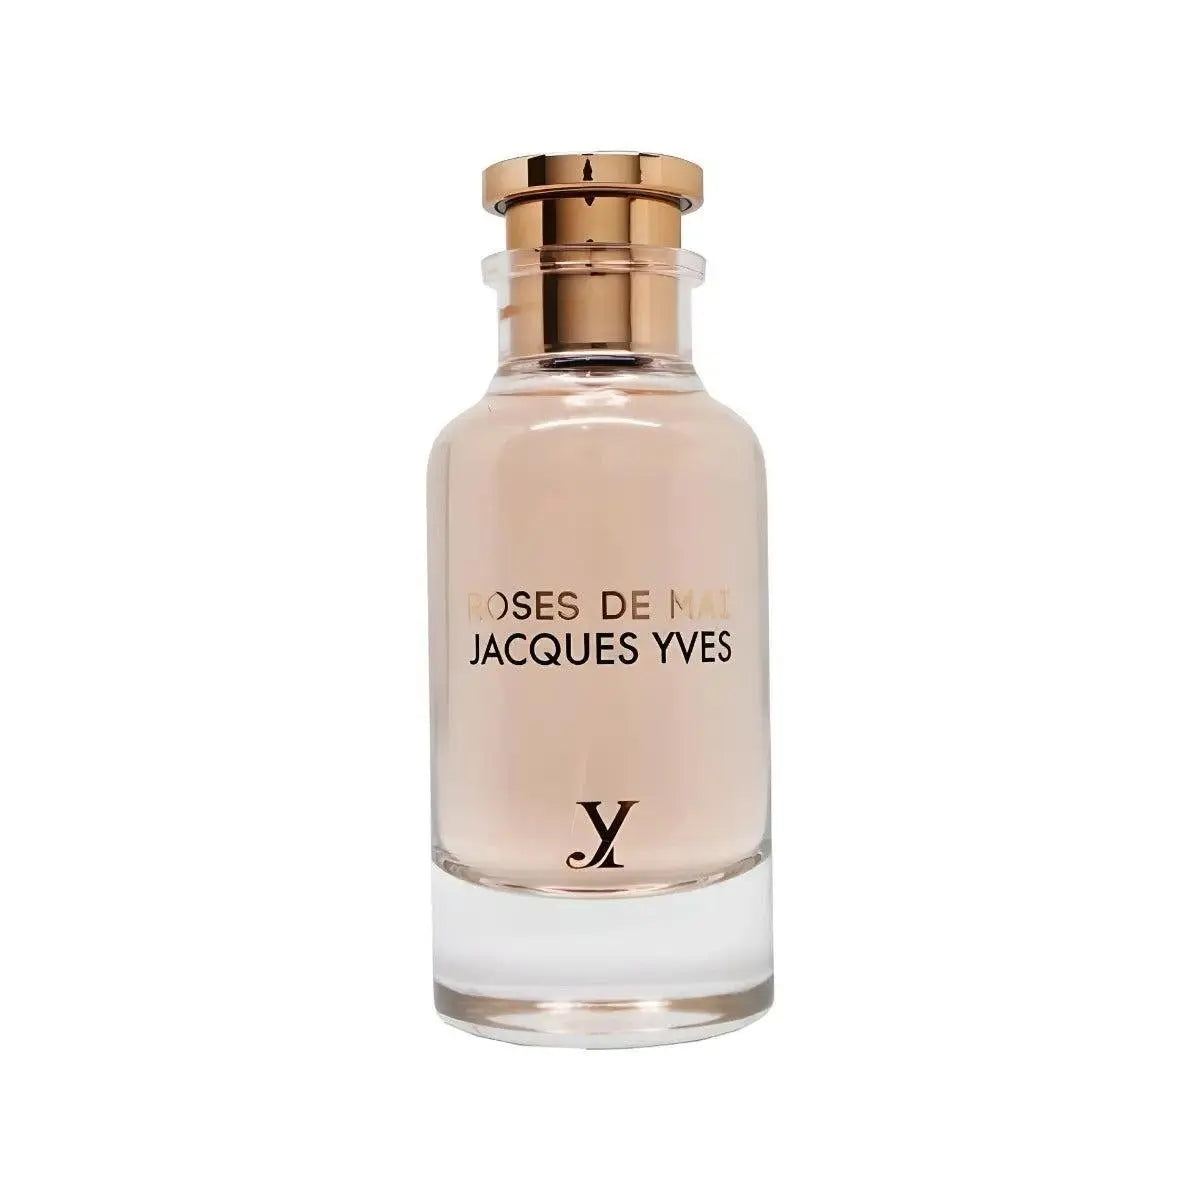 Roses De Mai Jacques Yves Perfume 100ml EDP Fragrance World